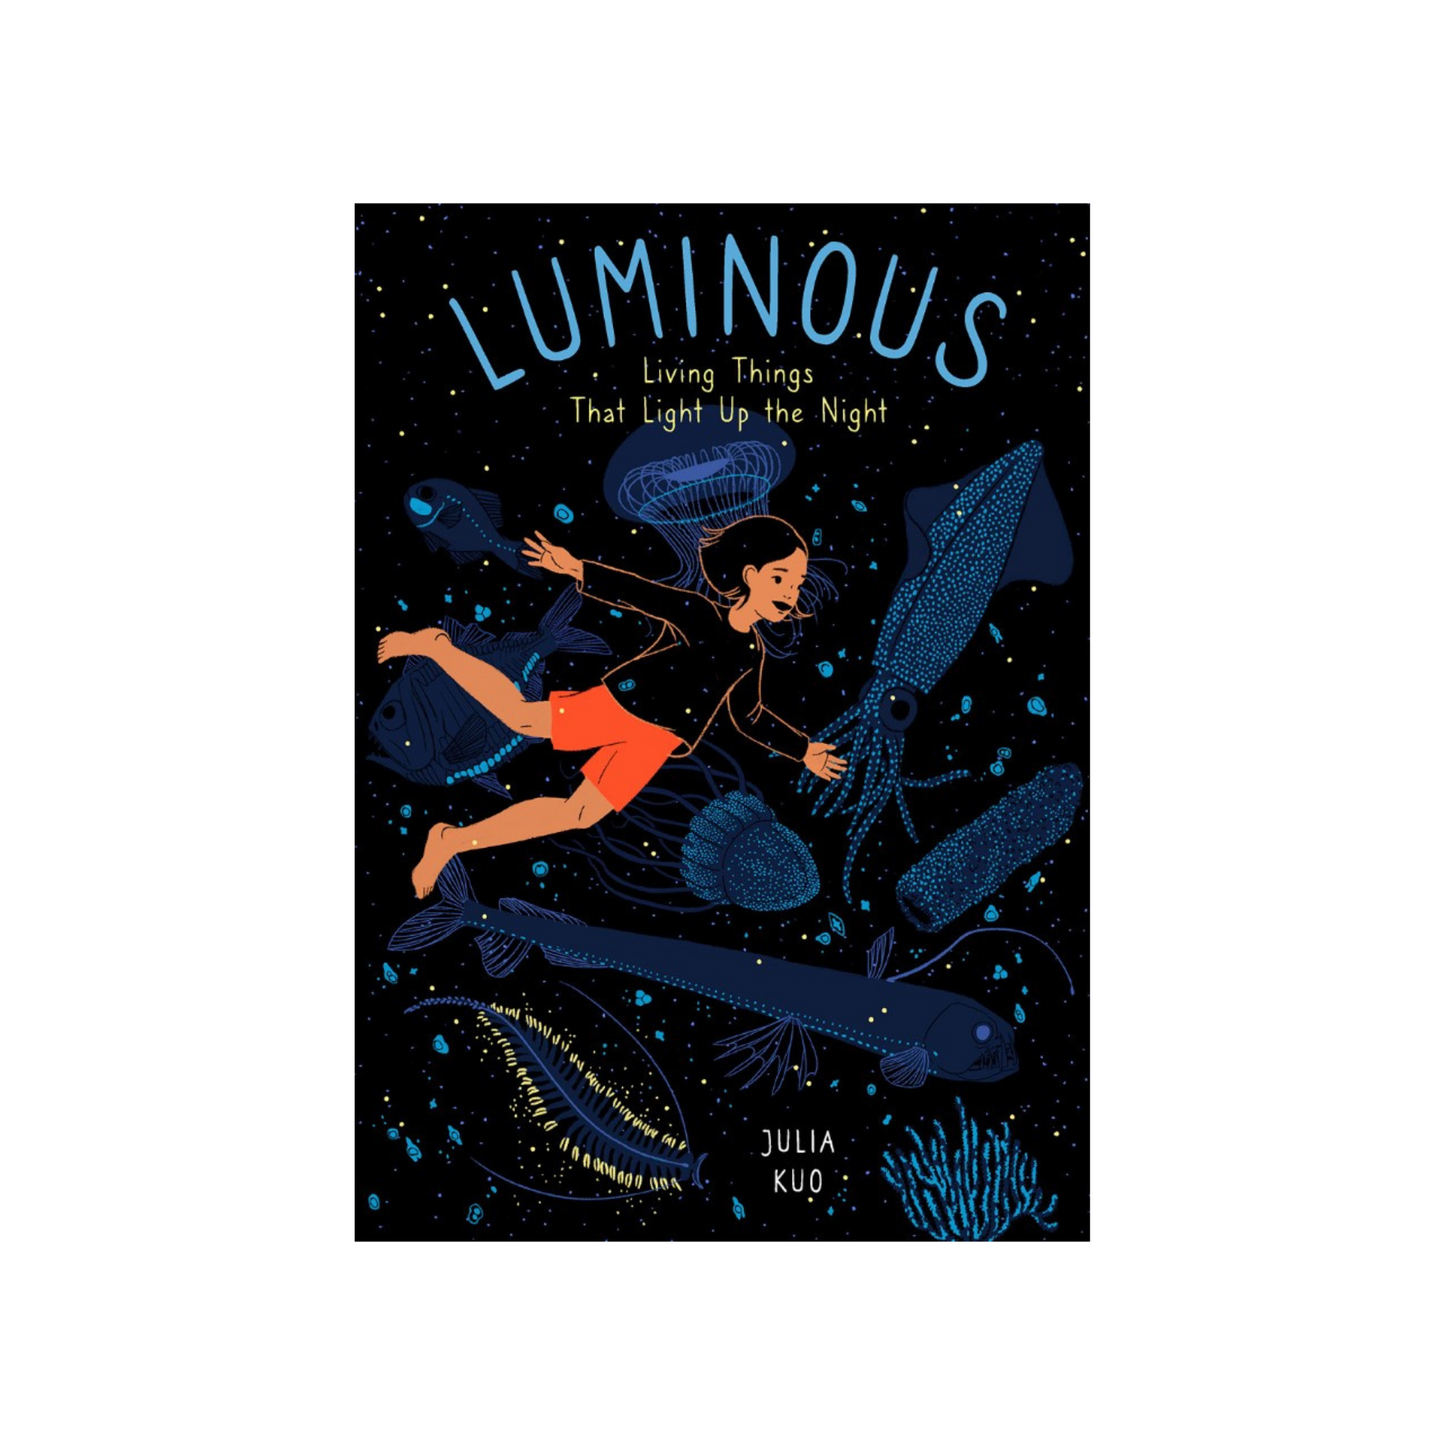 Luminous: Living Things that Light Up the Night